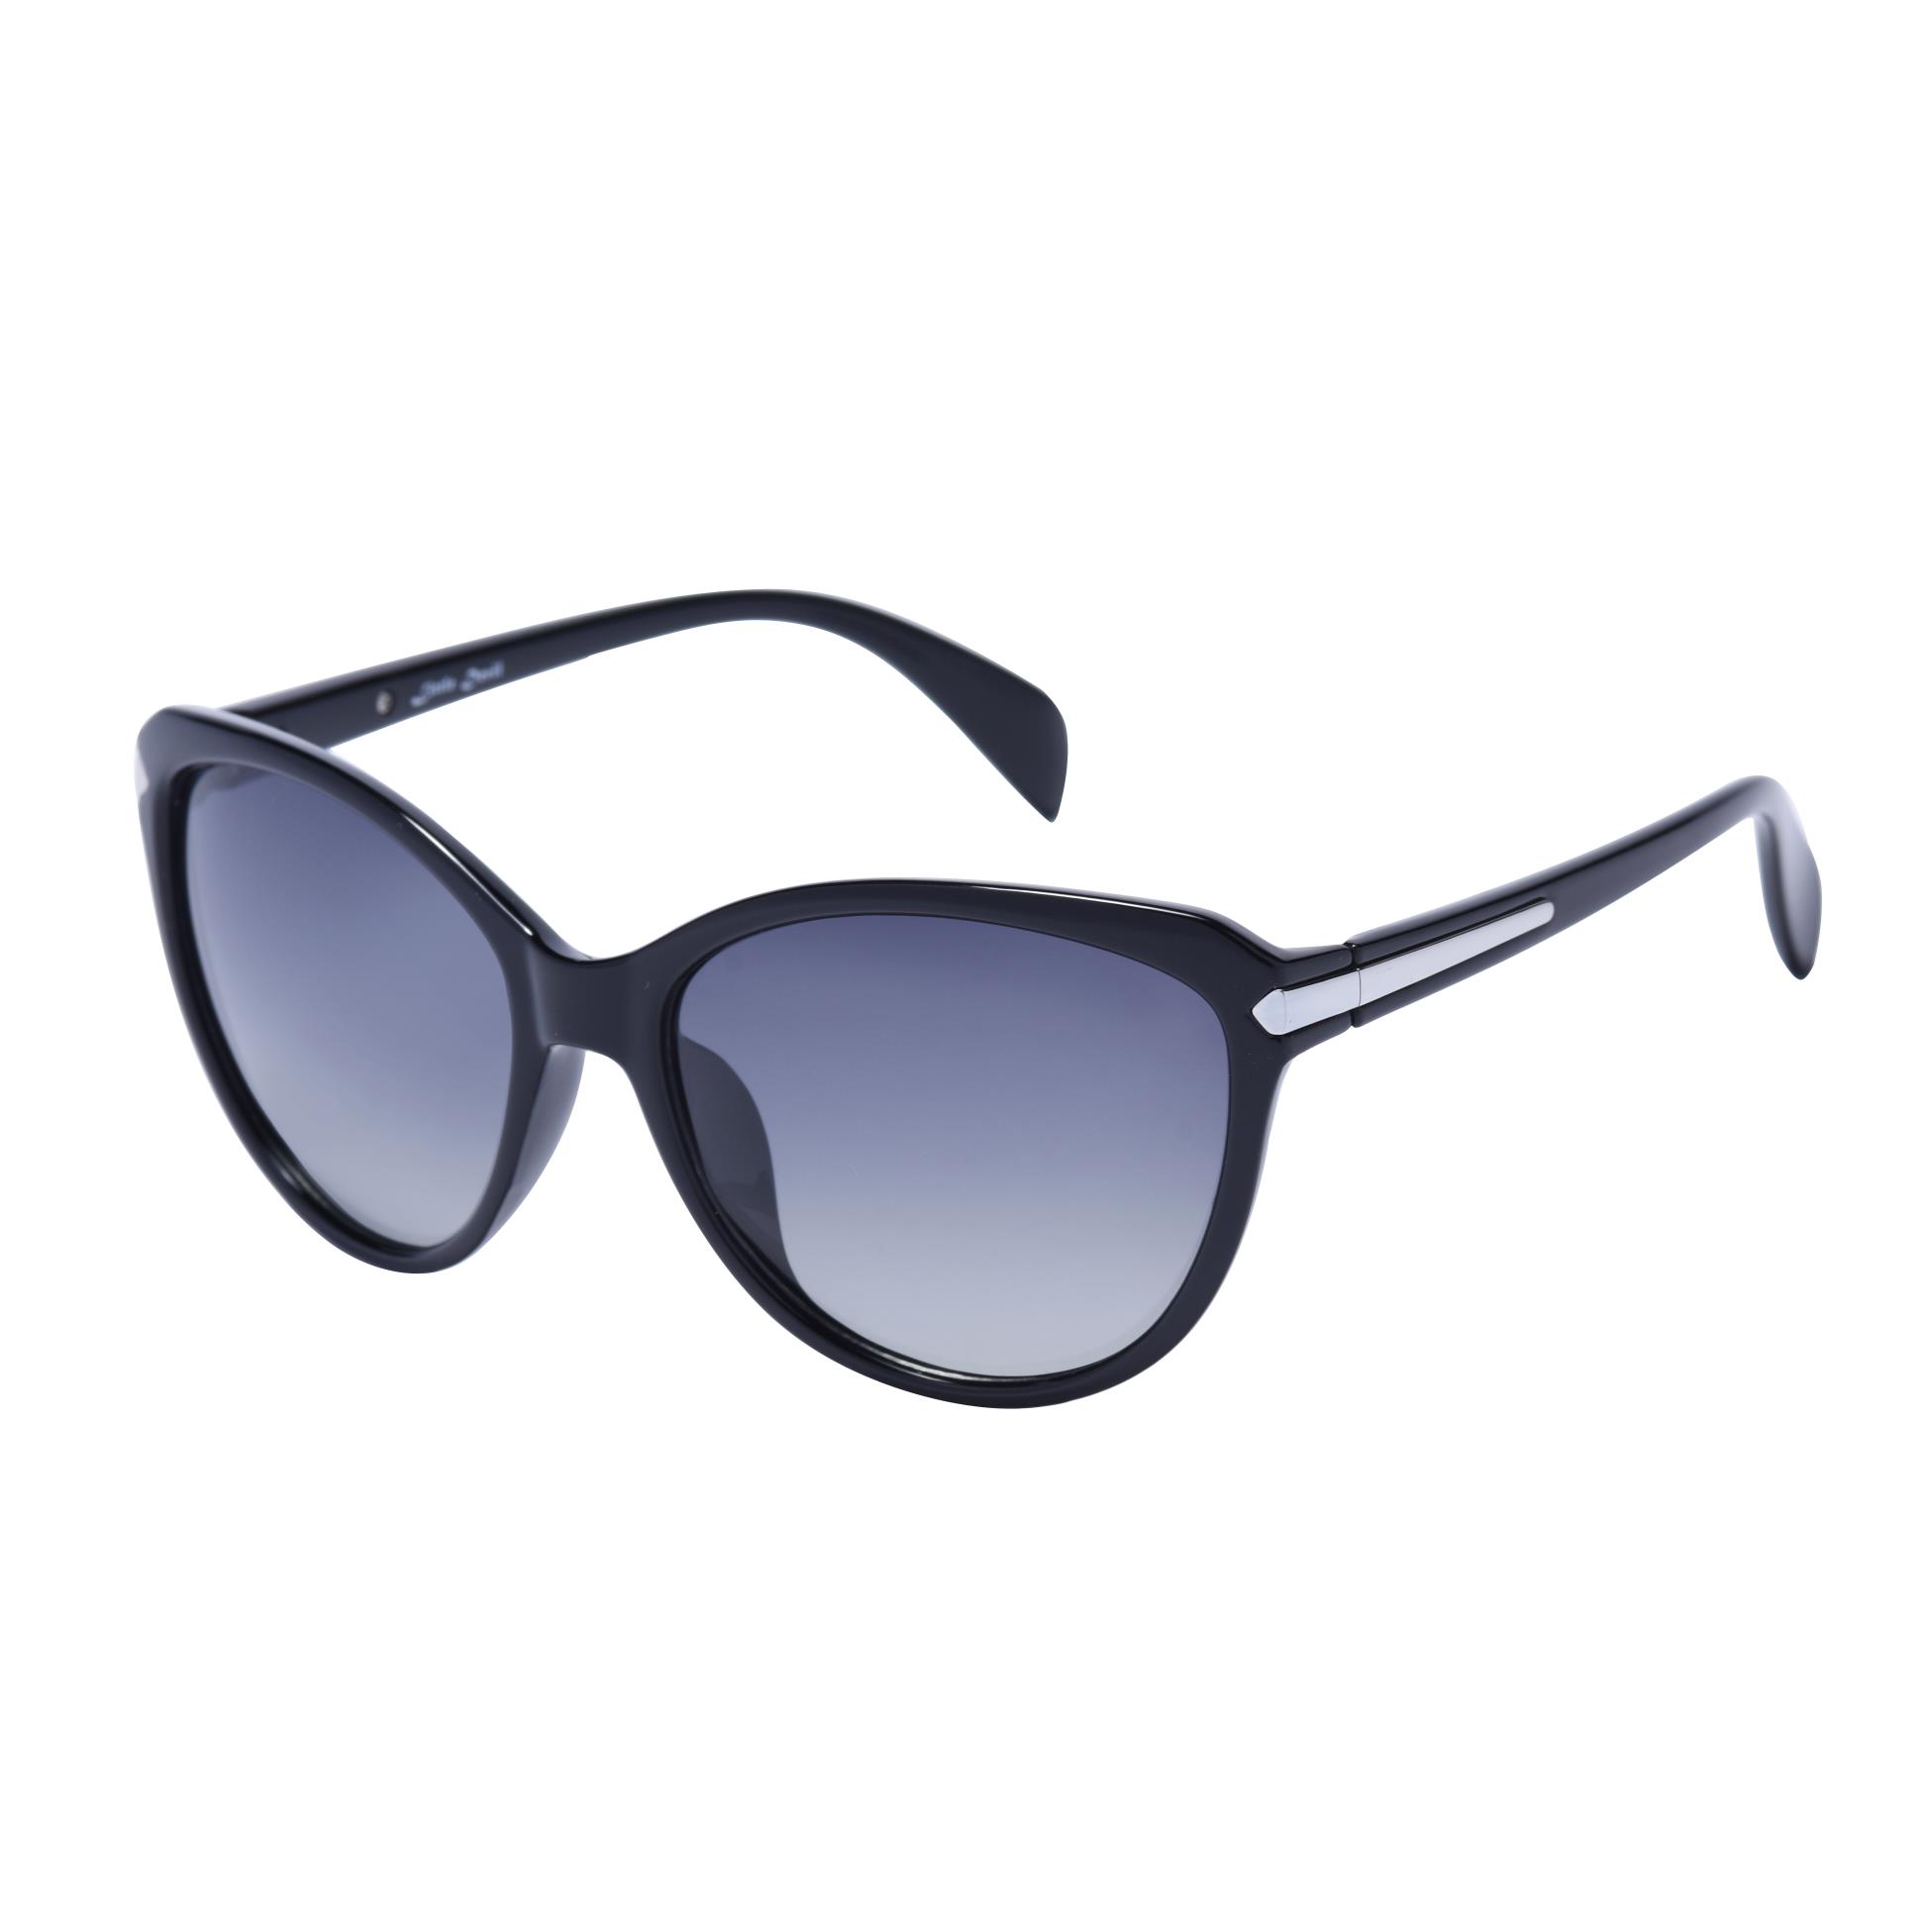 Fashion ladies cateye sunglasses 5505